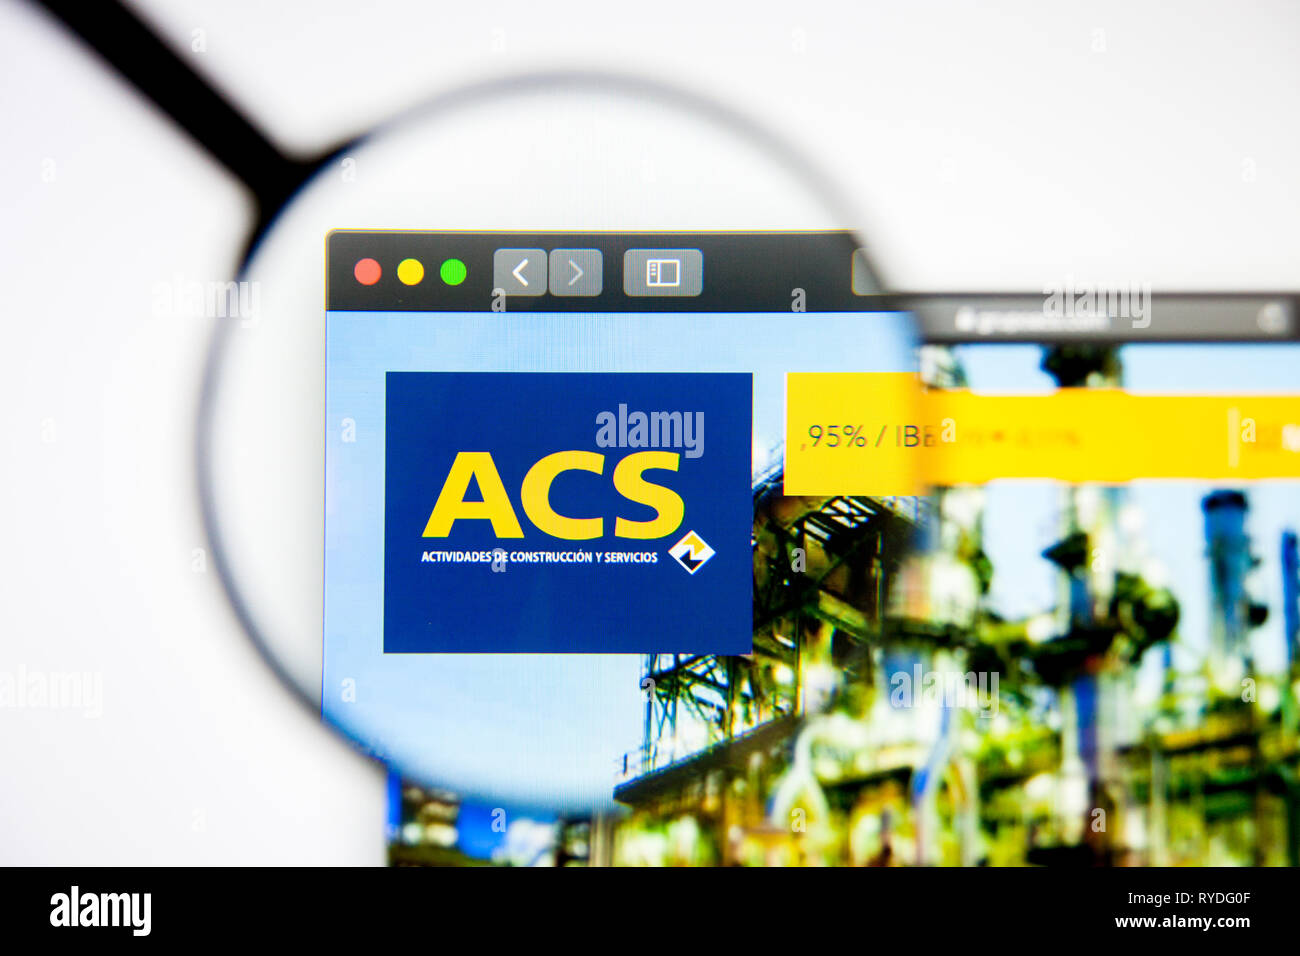 Los Angeles, Kalifornien, USA - 5. März 2019: Grupo ACS-Homepage. Grupo ACS Logo sichtbar auf dem Display, Illustrative Editorial Stockfoto